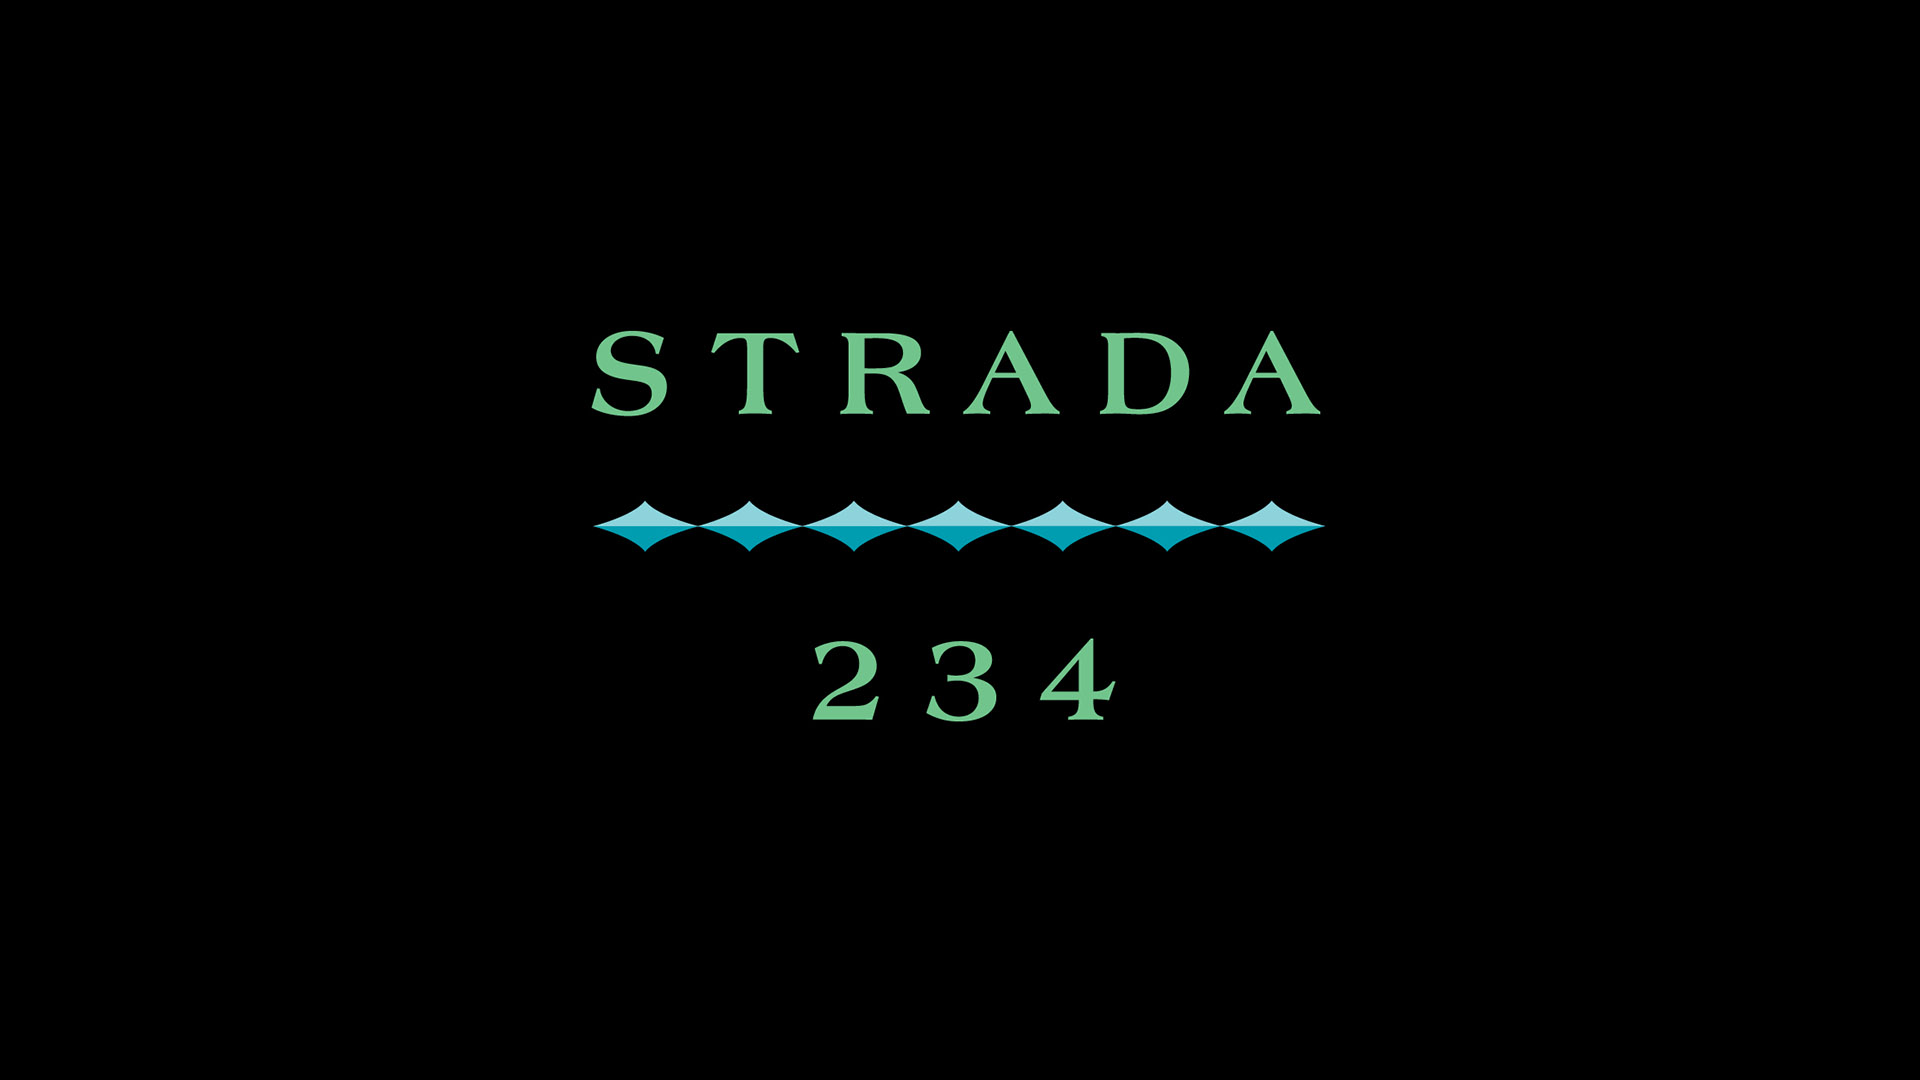 strada234 logo on black